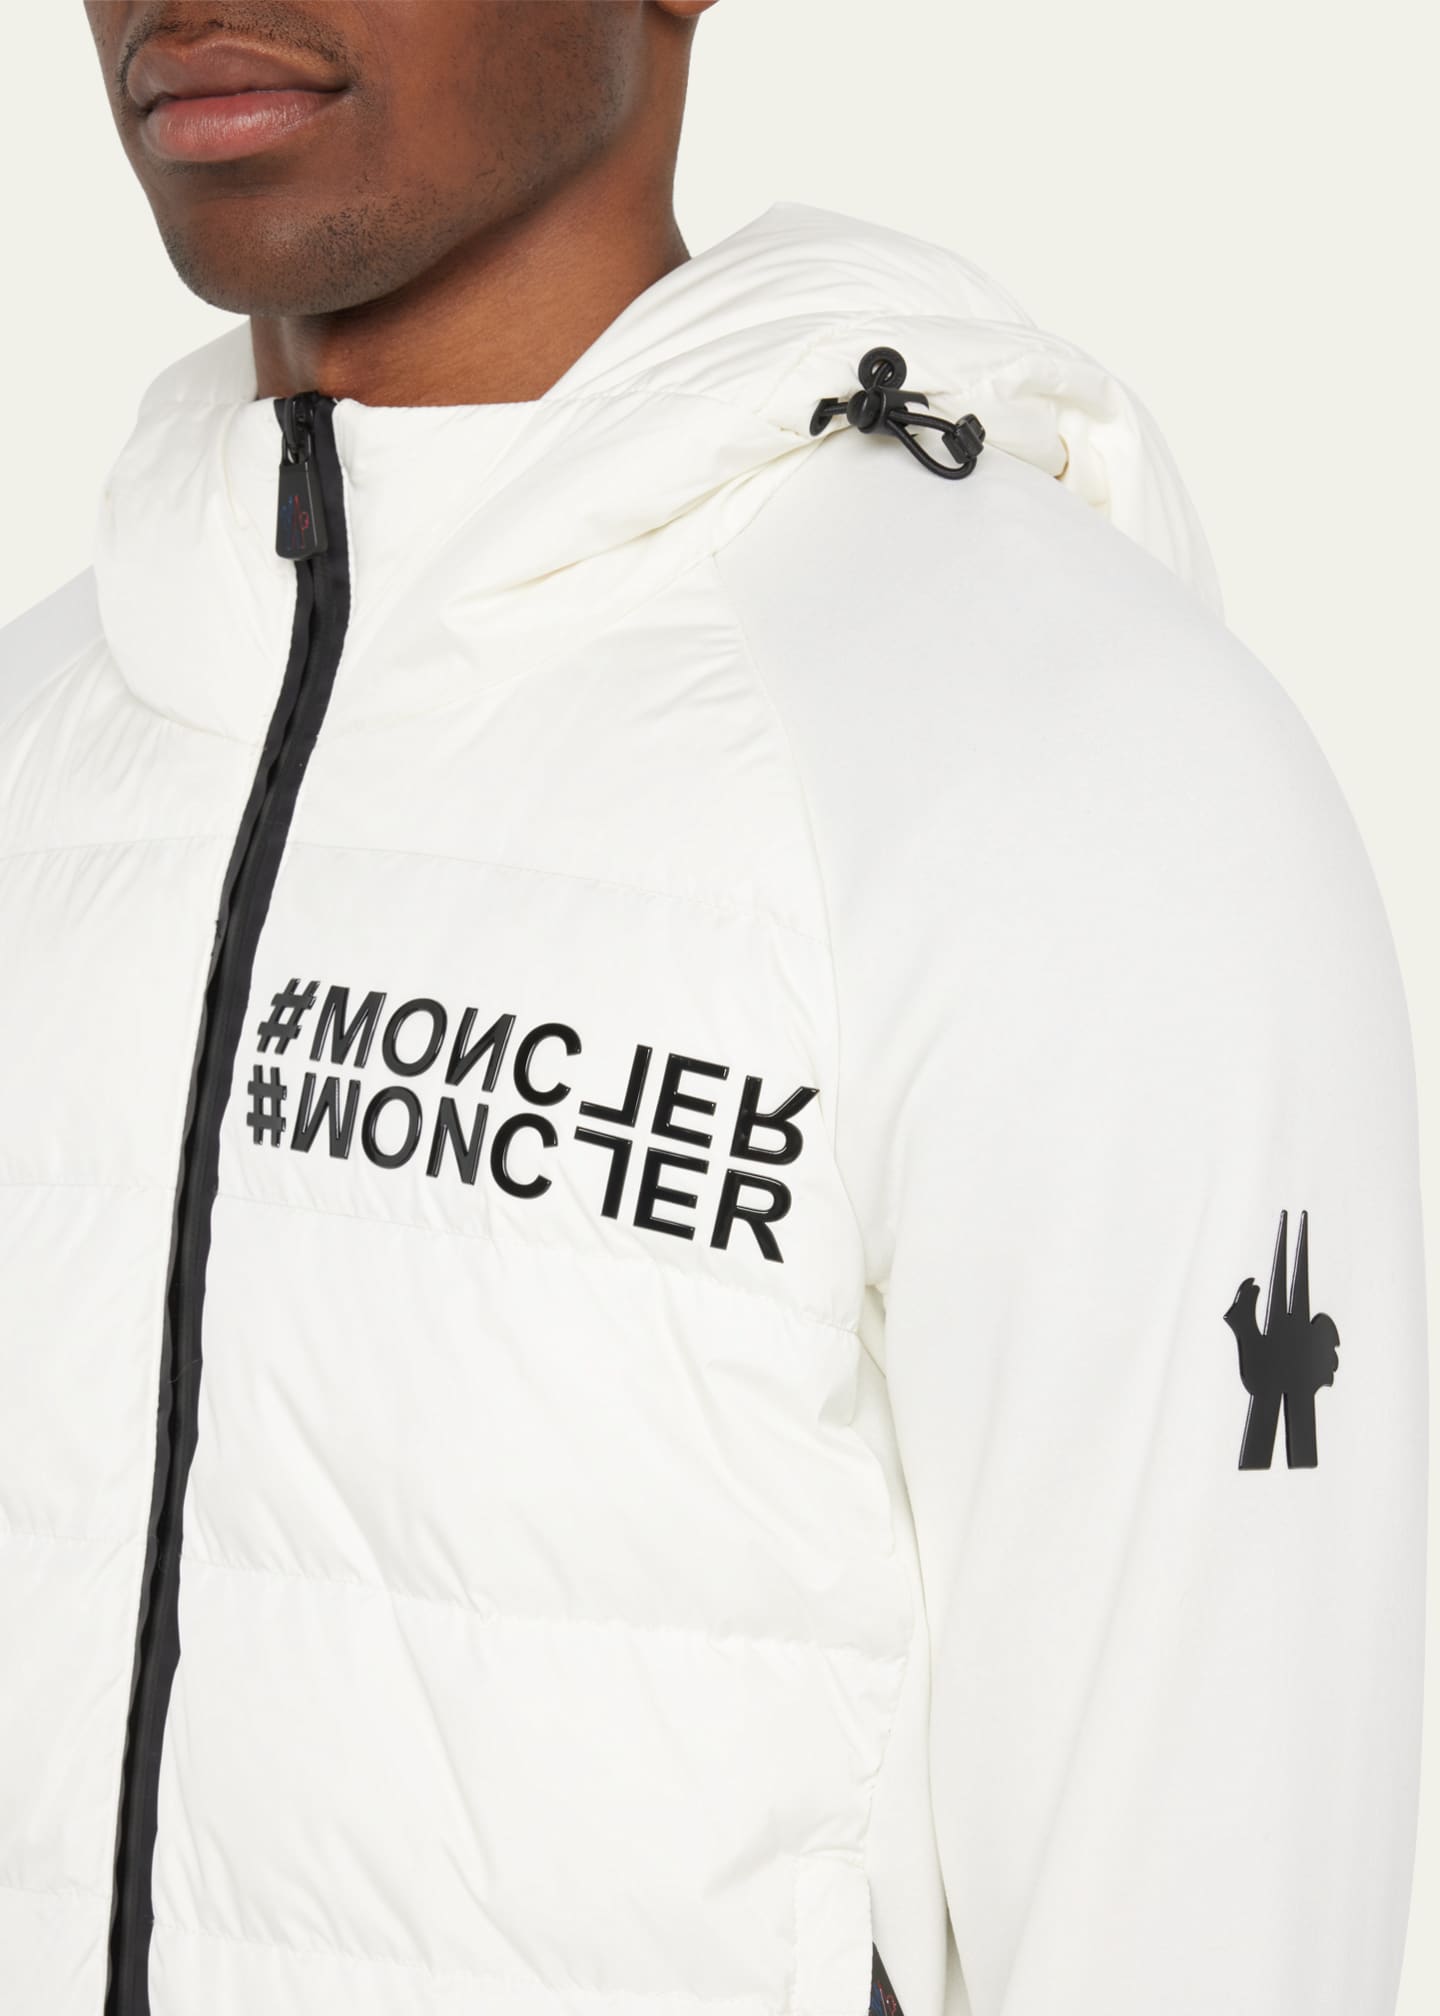 Moncler Grenoble Men's Hers Jacket - Bergdorf Goodman